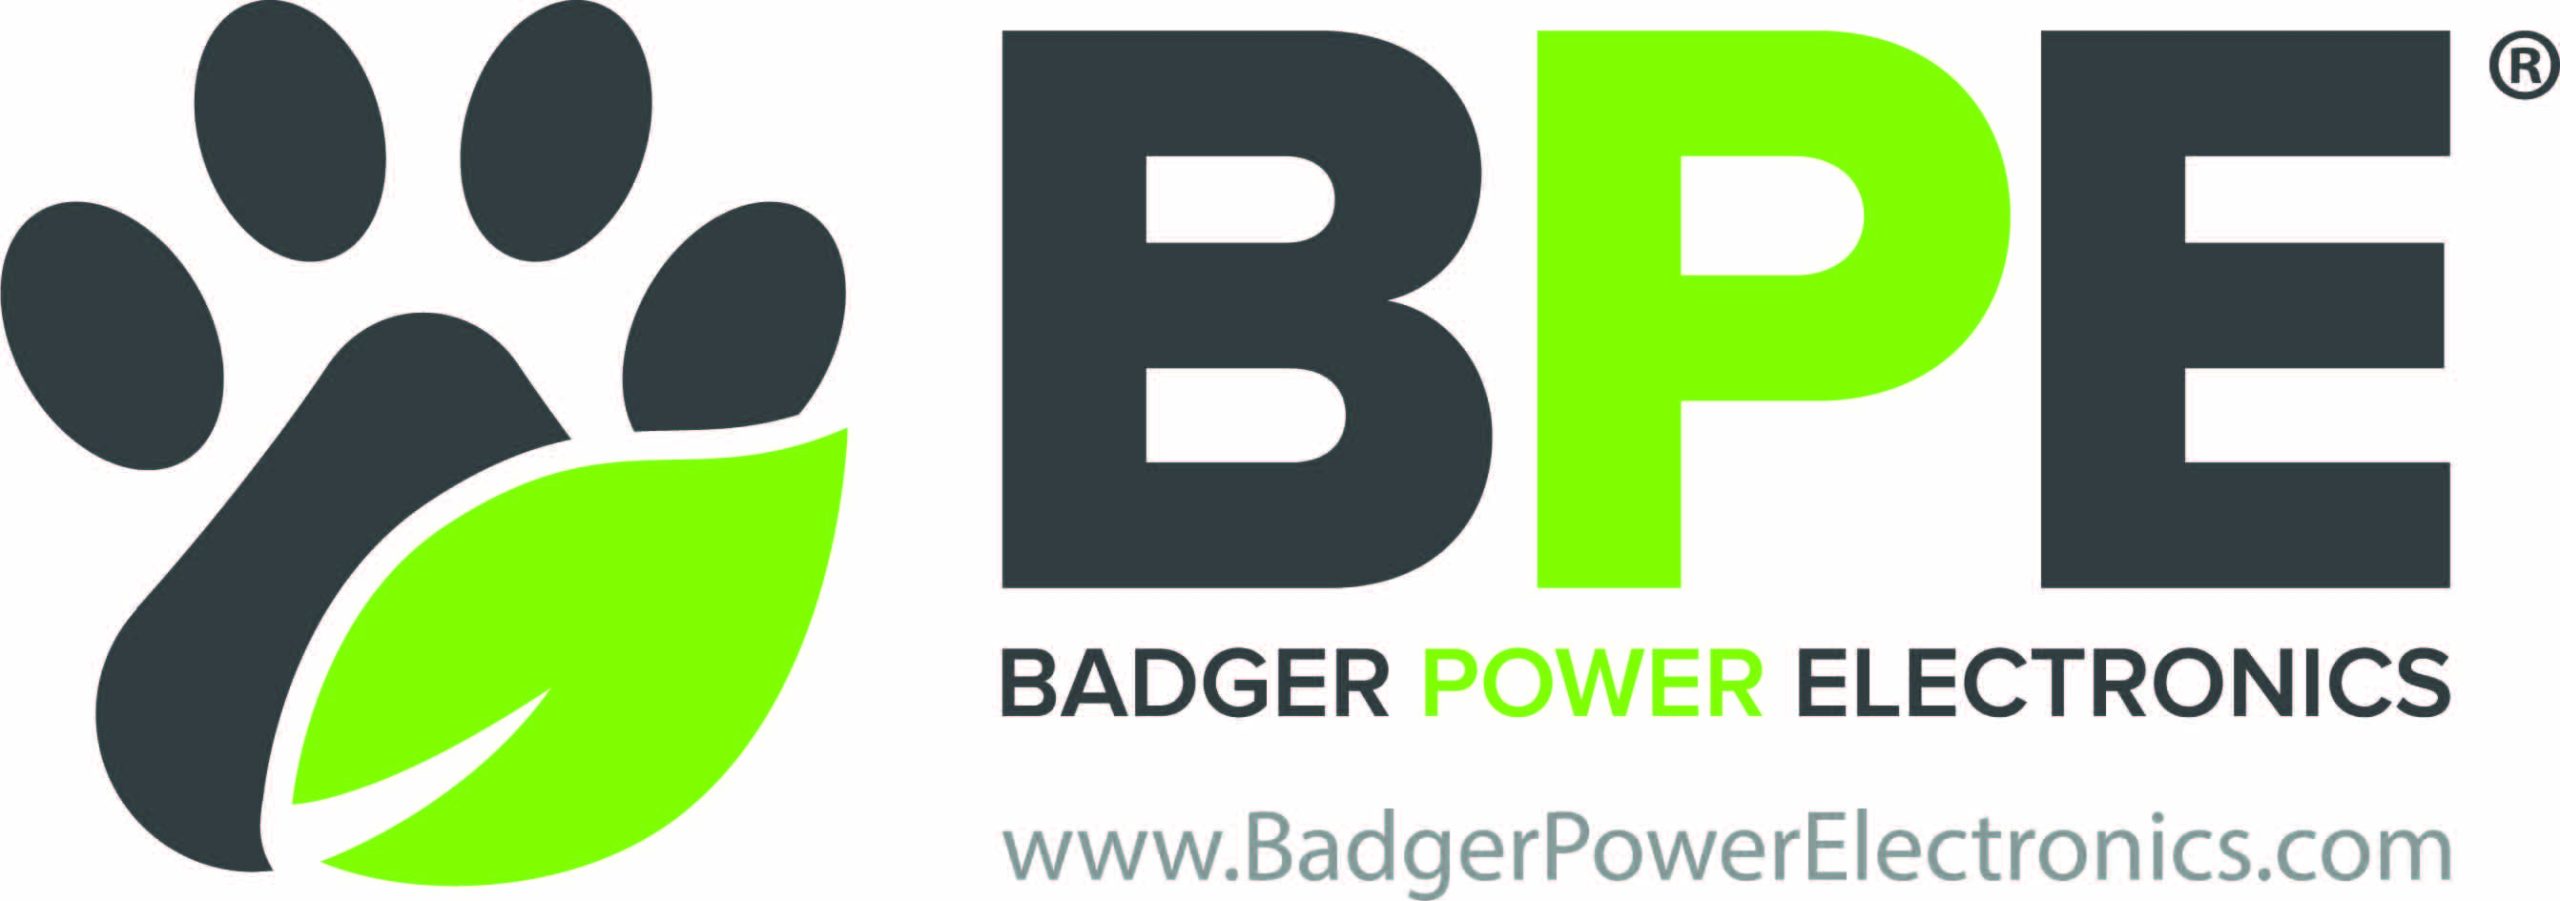 Badger Power Electronics